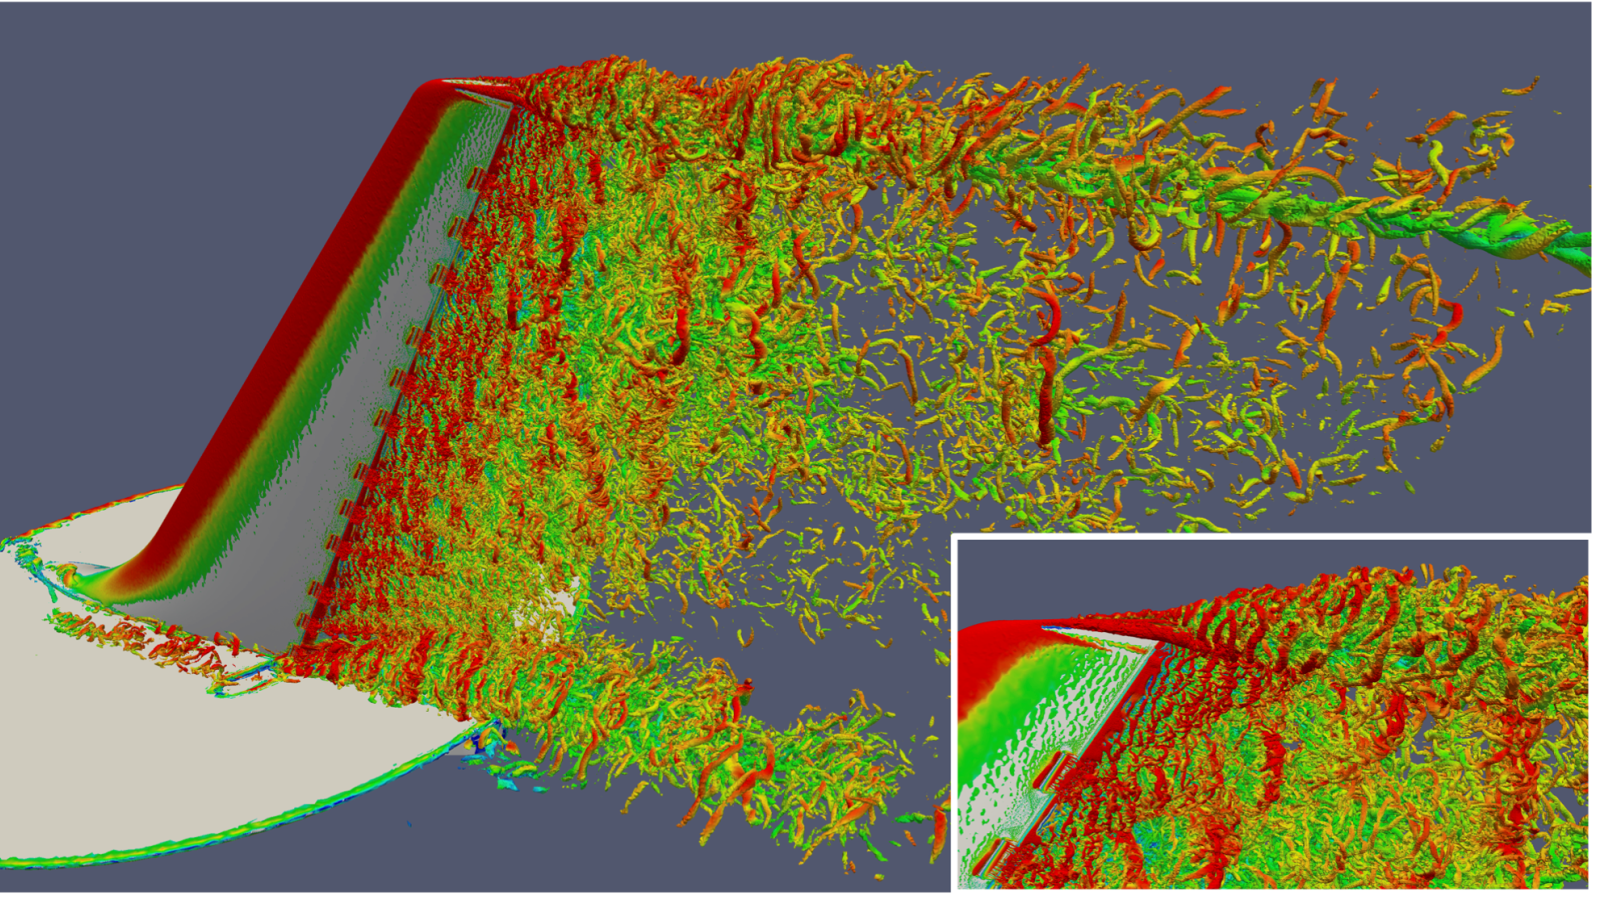 A computer simulation of turbulence modeling